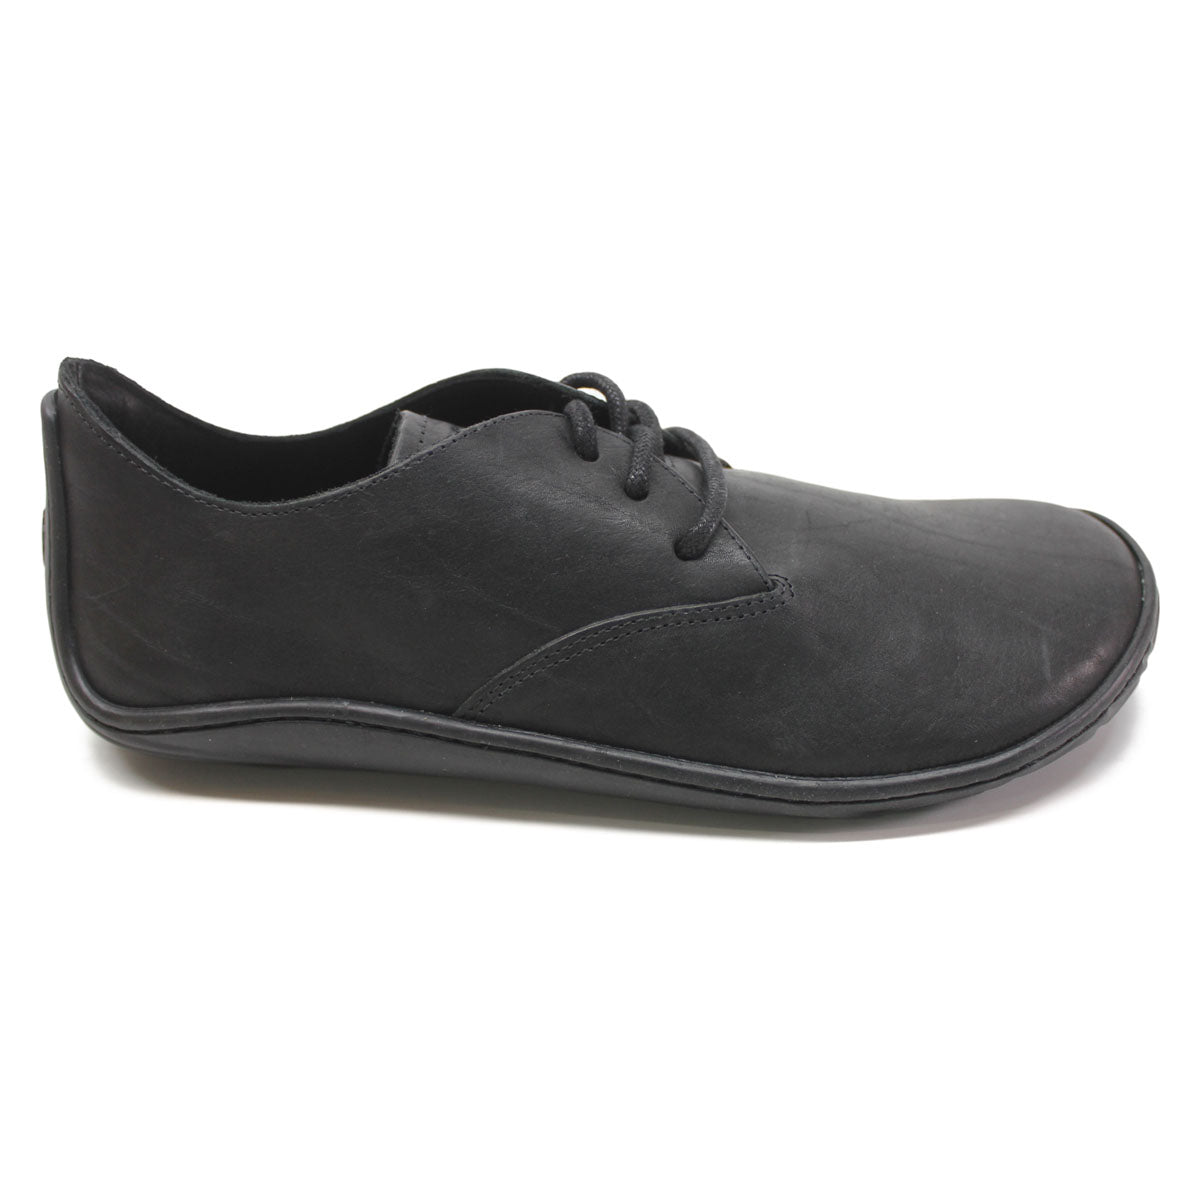 Vivobarefoot Mens Addis Oxford Leather Shoes - UK 7